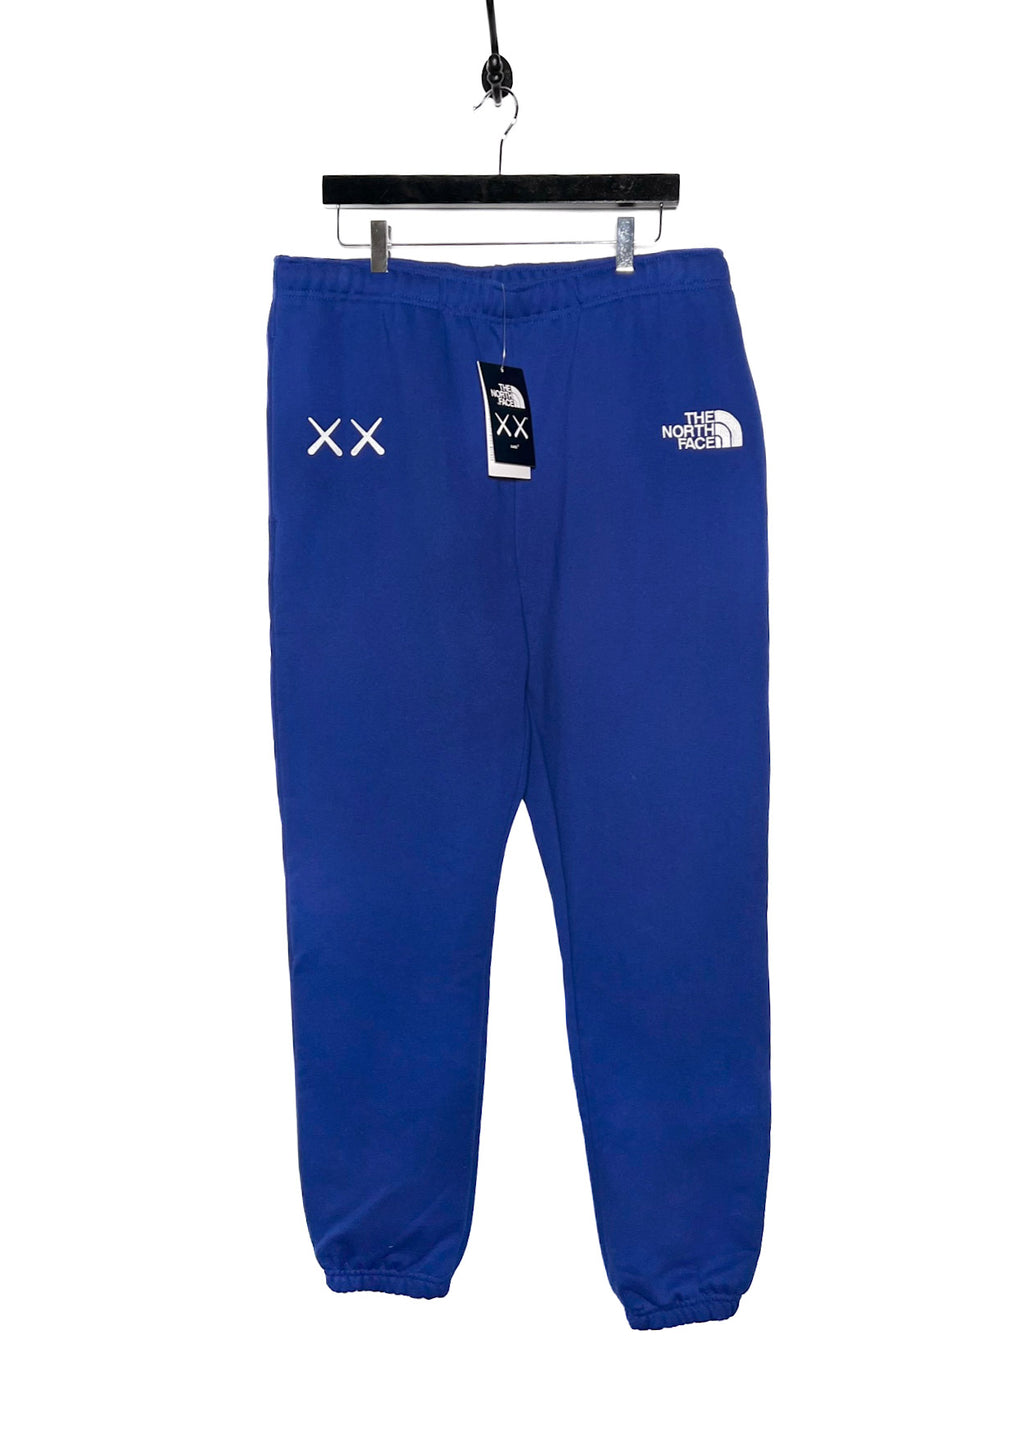 The North Face X KAWS Bolt Blue Sweatpants